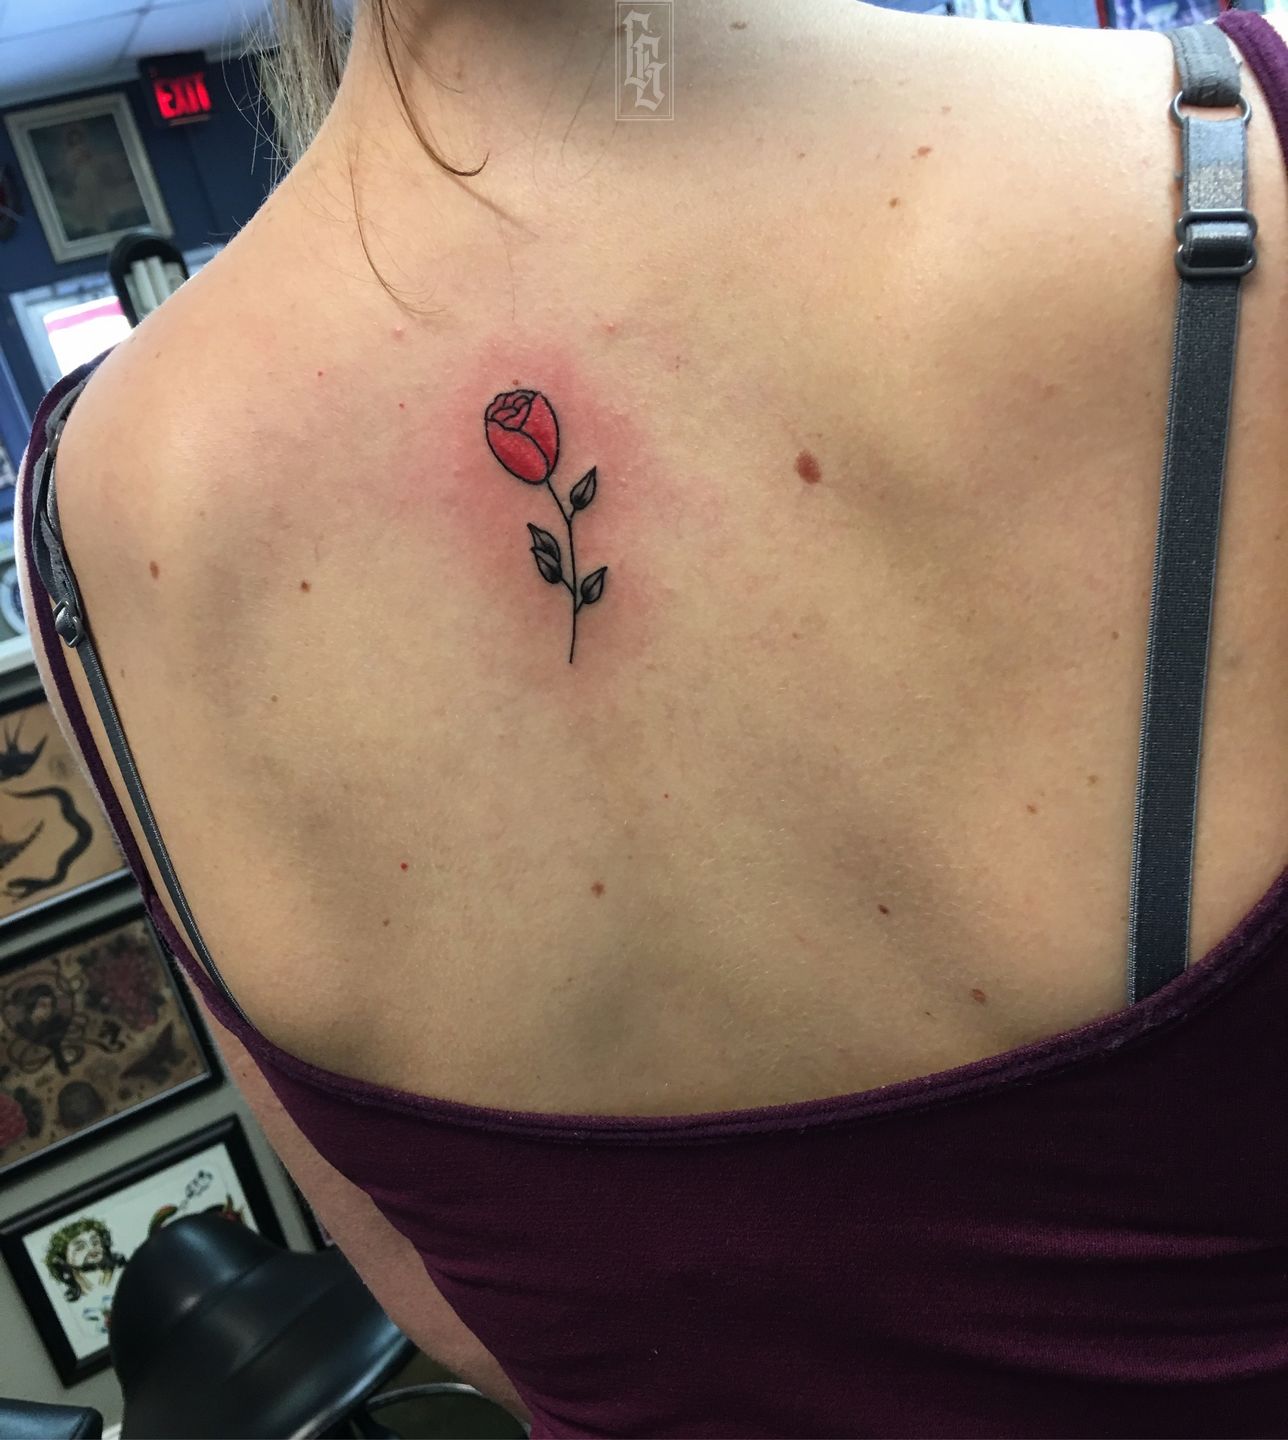 rosebud tattoo